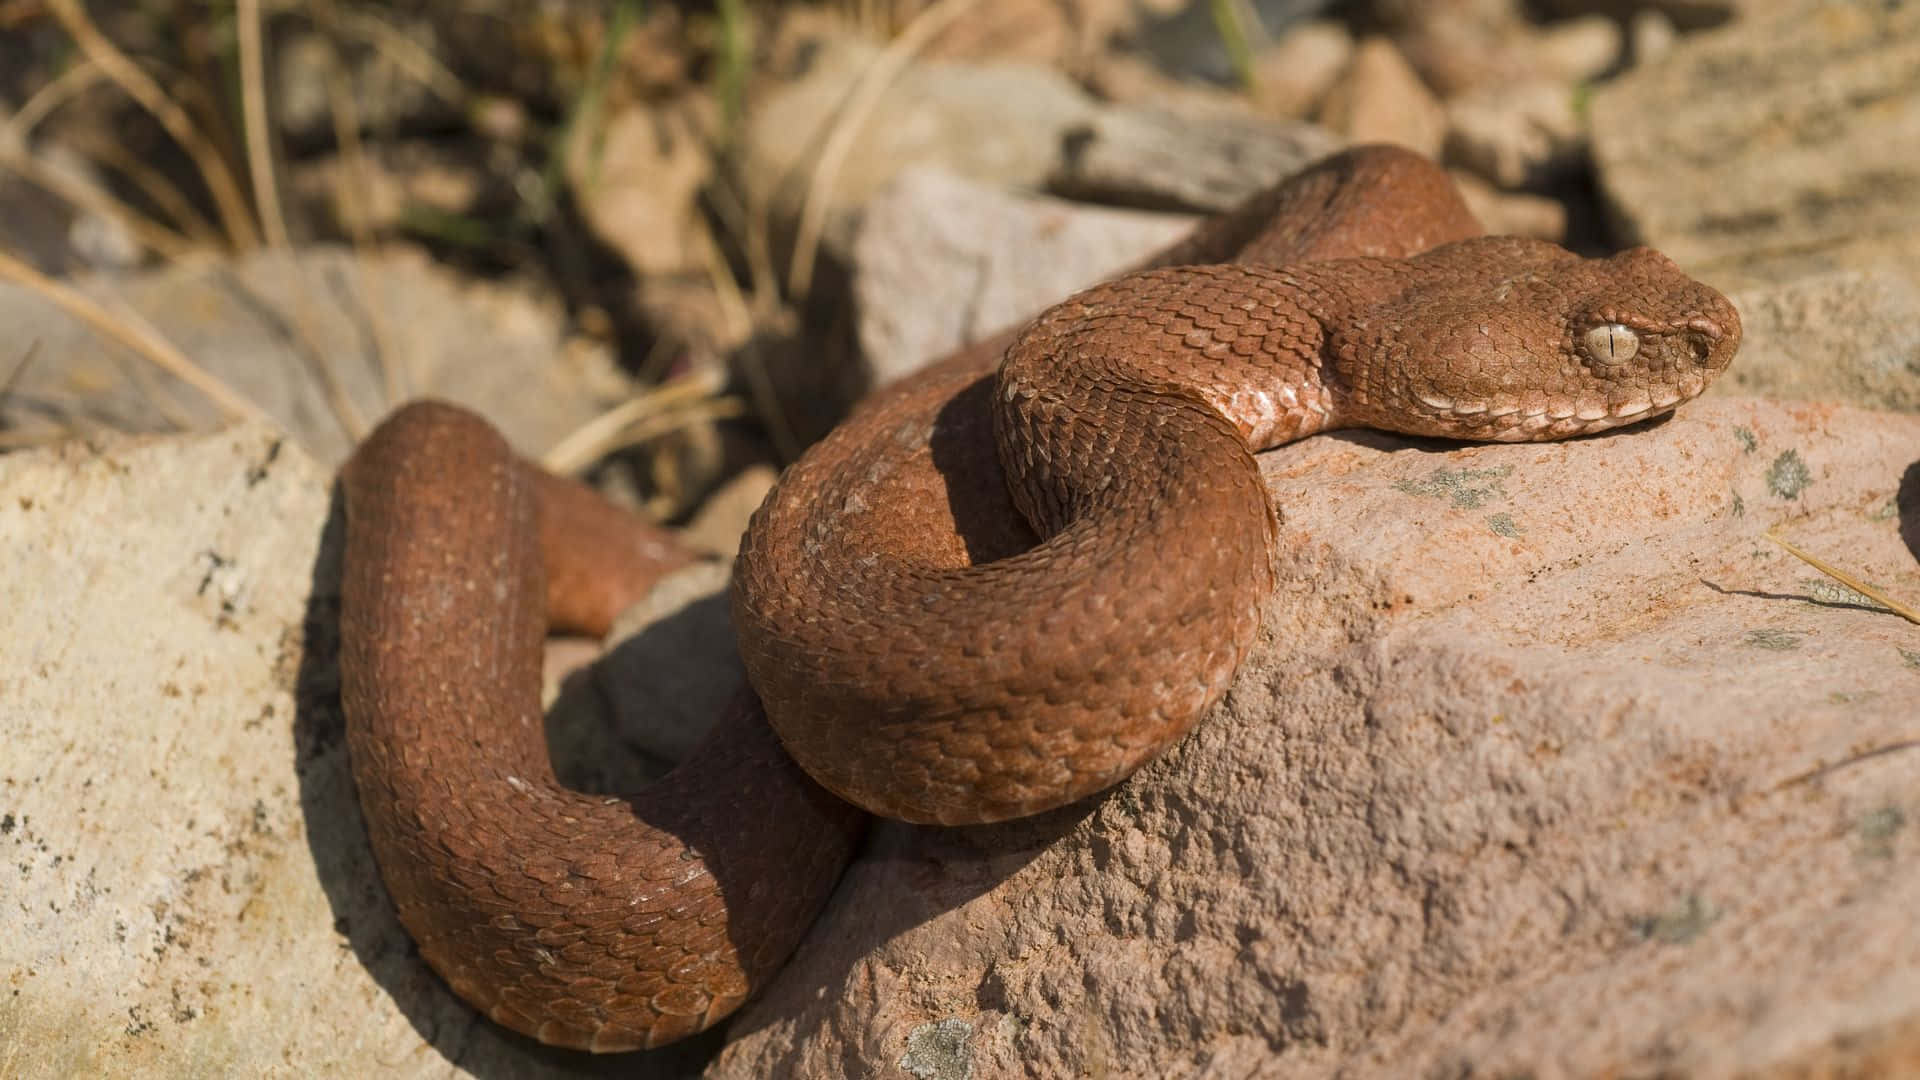 Majestic Brown Snake in its Natural Habitat Wallpaper